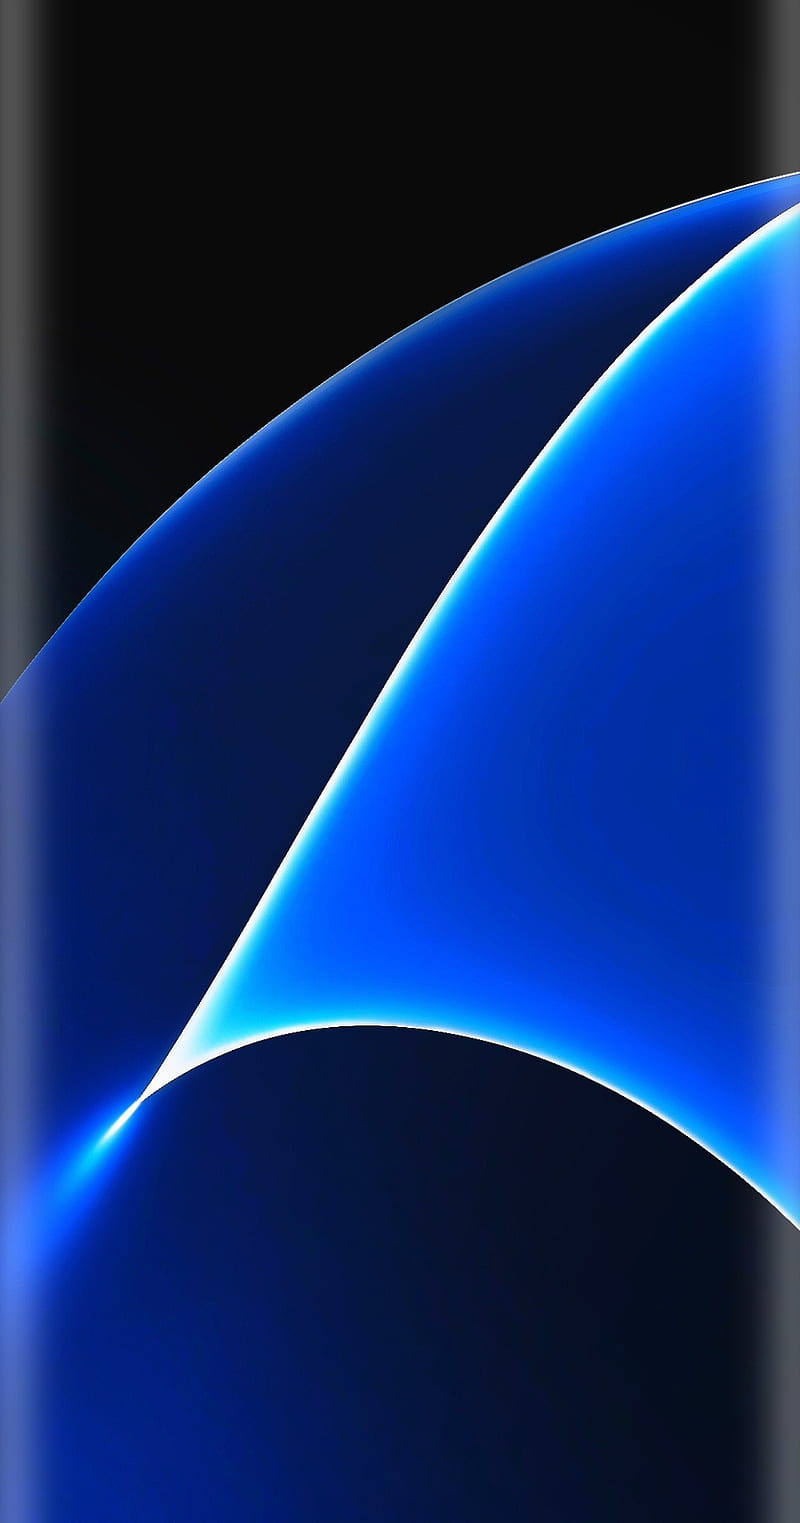 720P free download | Samsung S7 Edge, blue, galaxy, HD mobile wallpaper